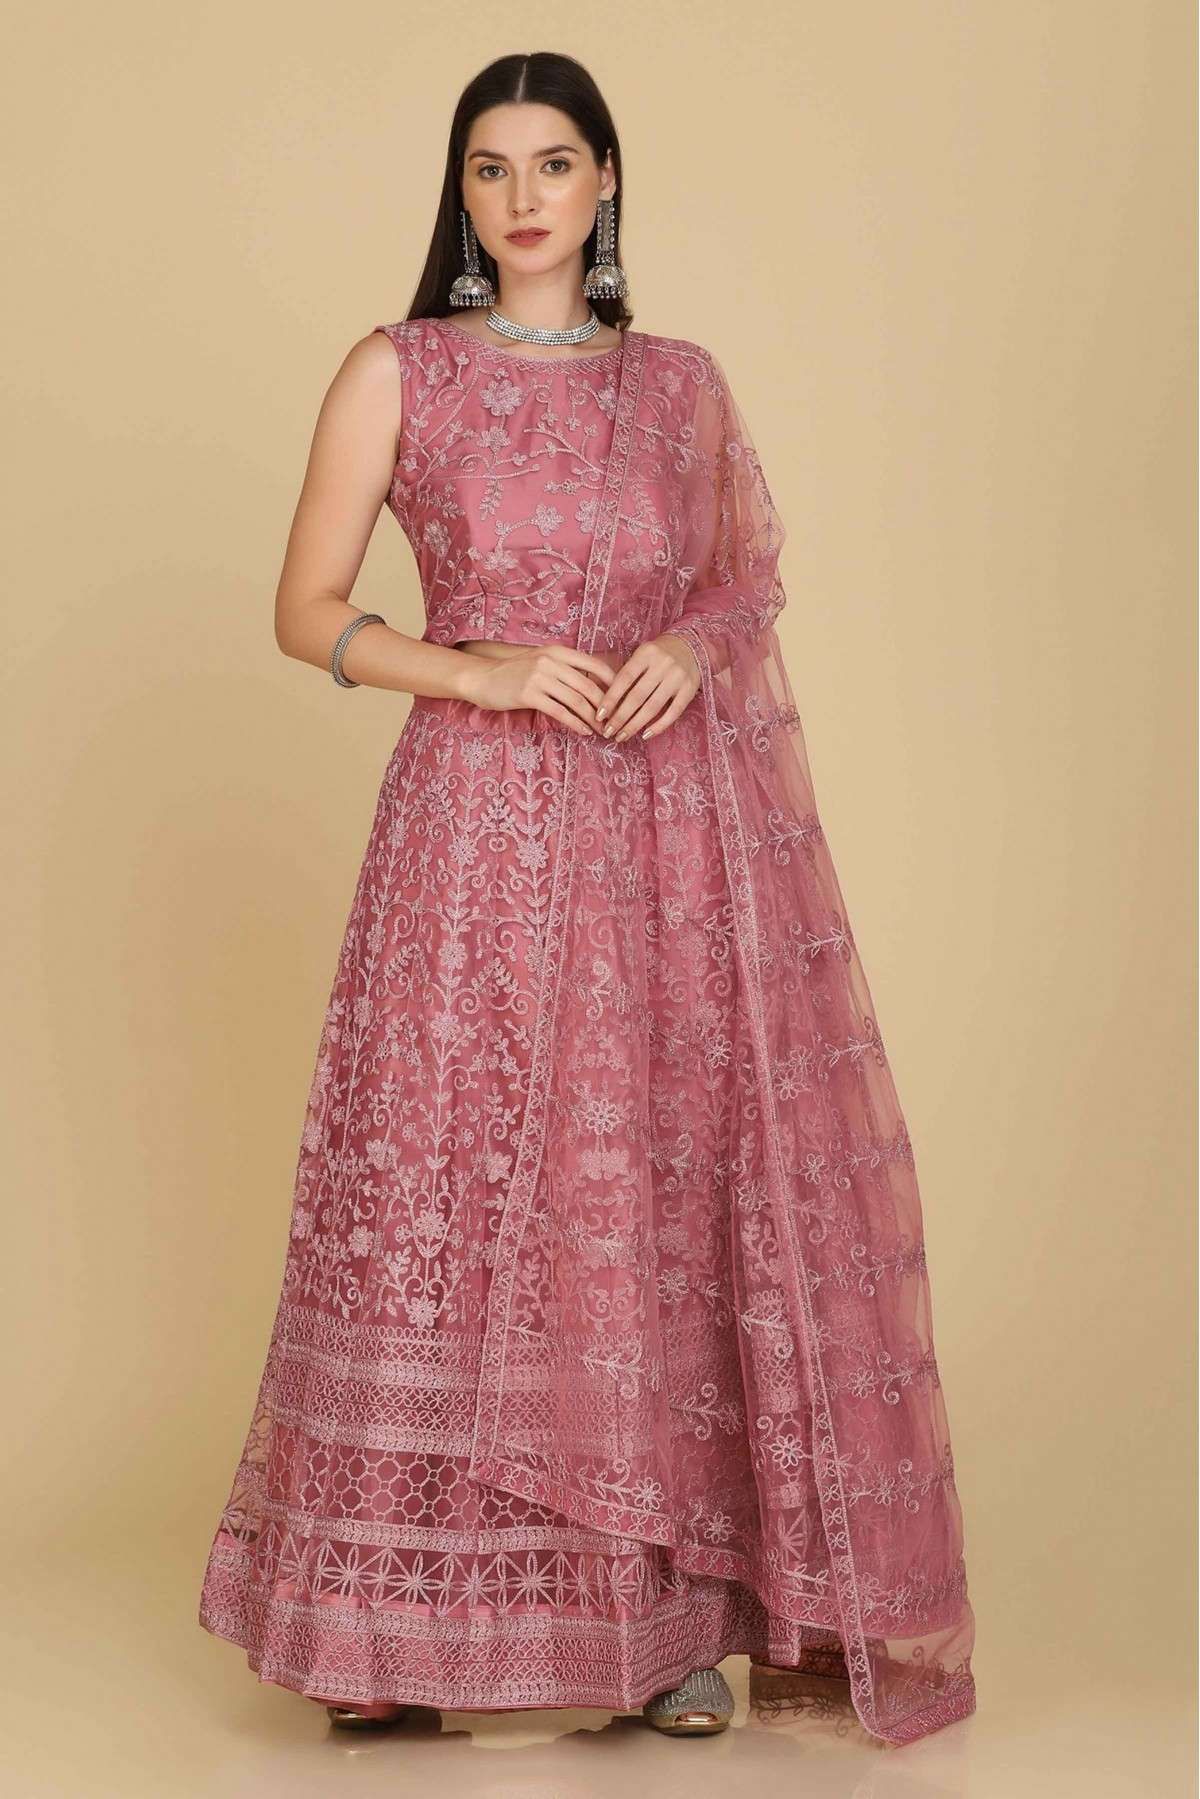 Net Embroidery Lehenga Choli In Dusty Pink Colour - LD5680395